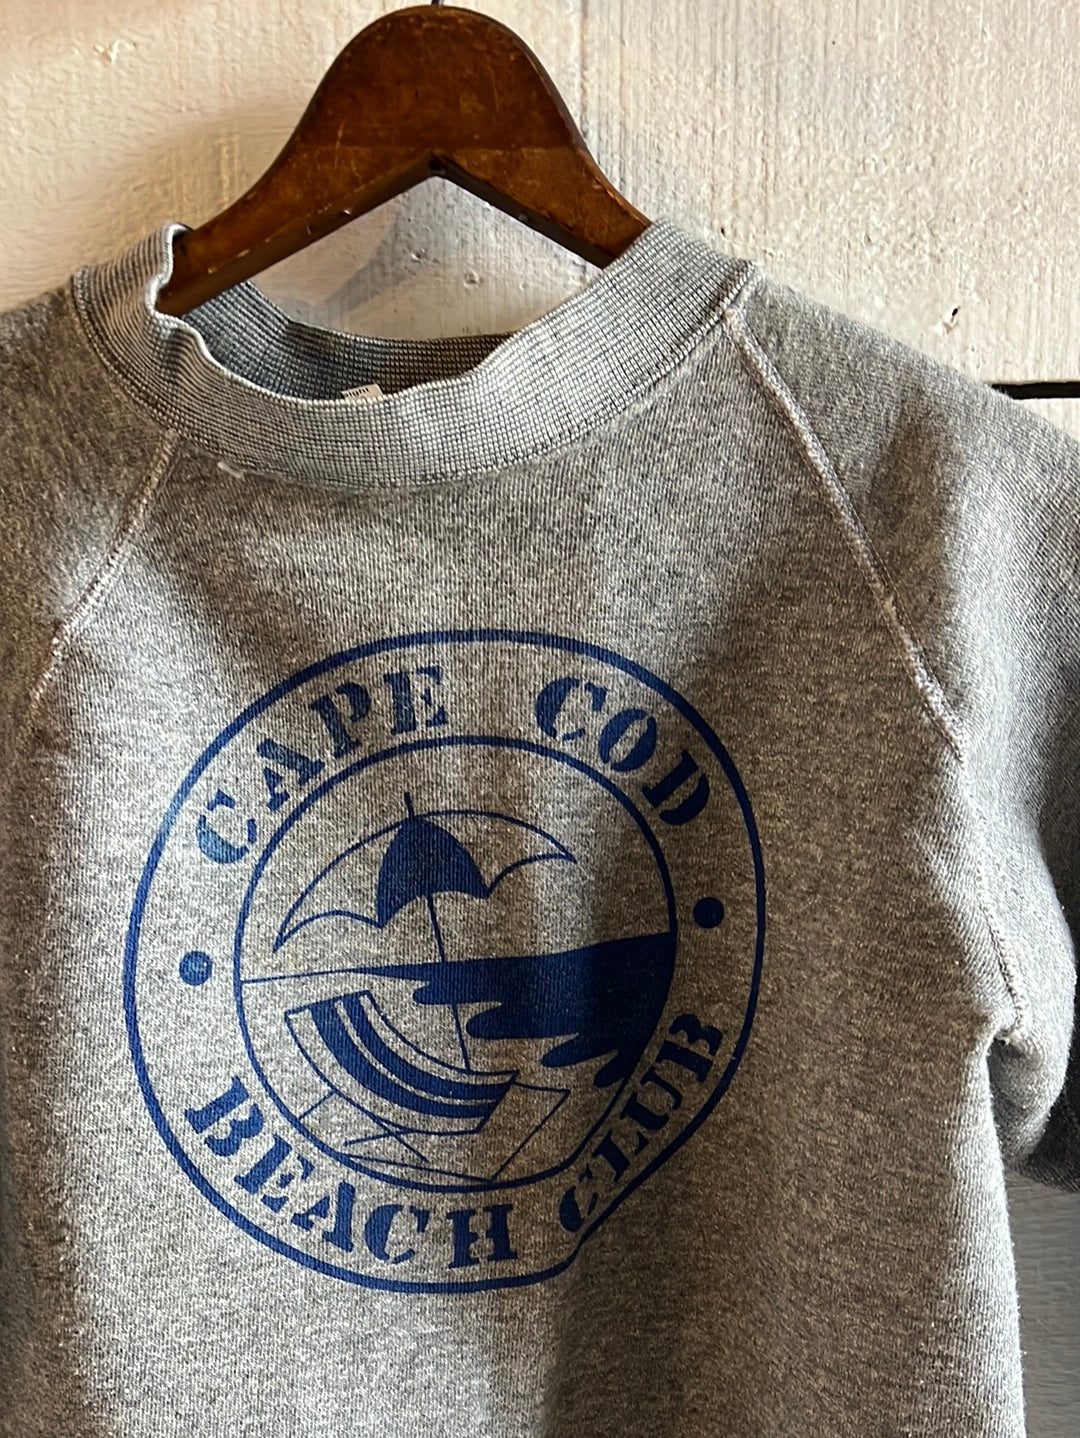 Vintage Raglan Sweatshirt - Cape Cod Beach Club